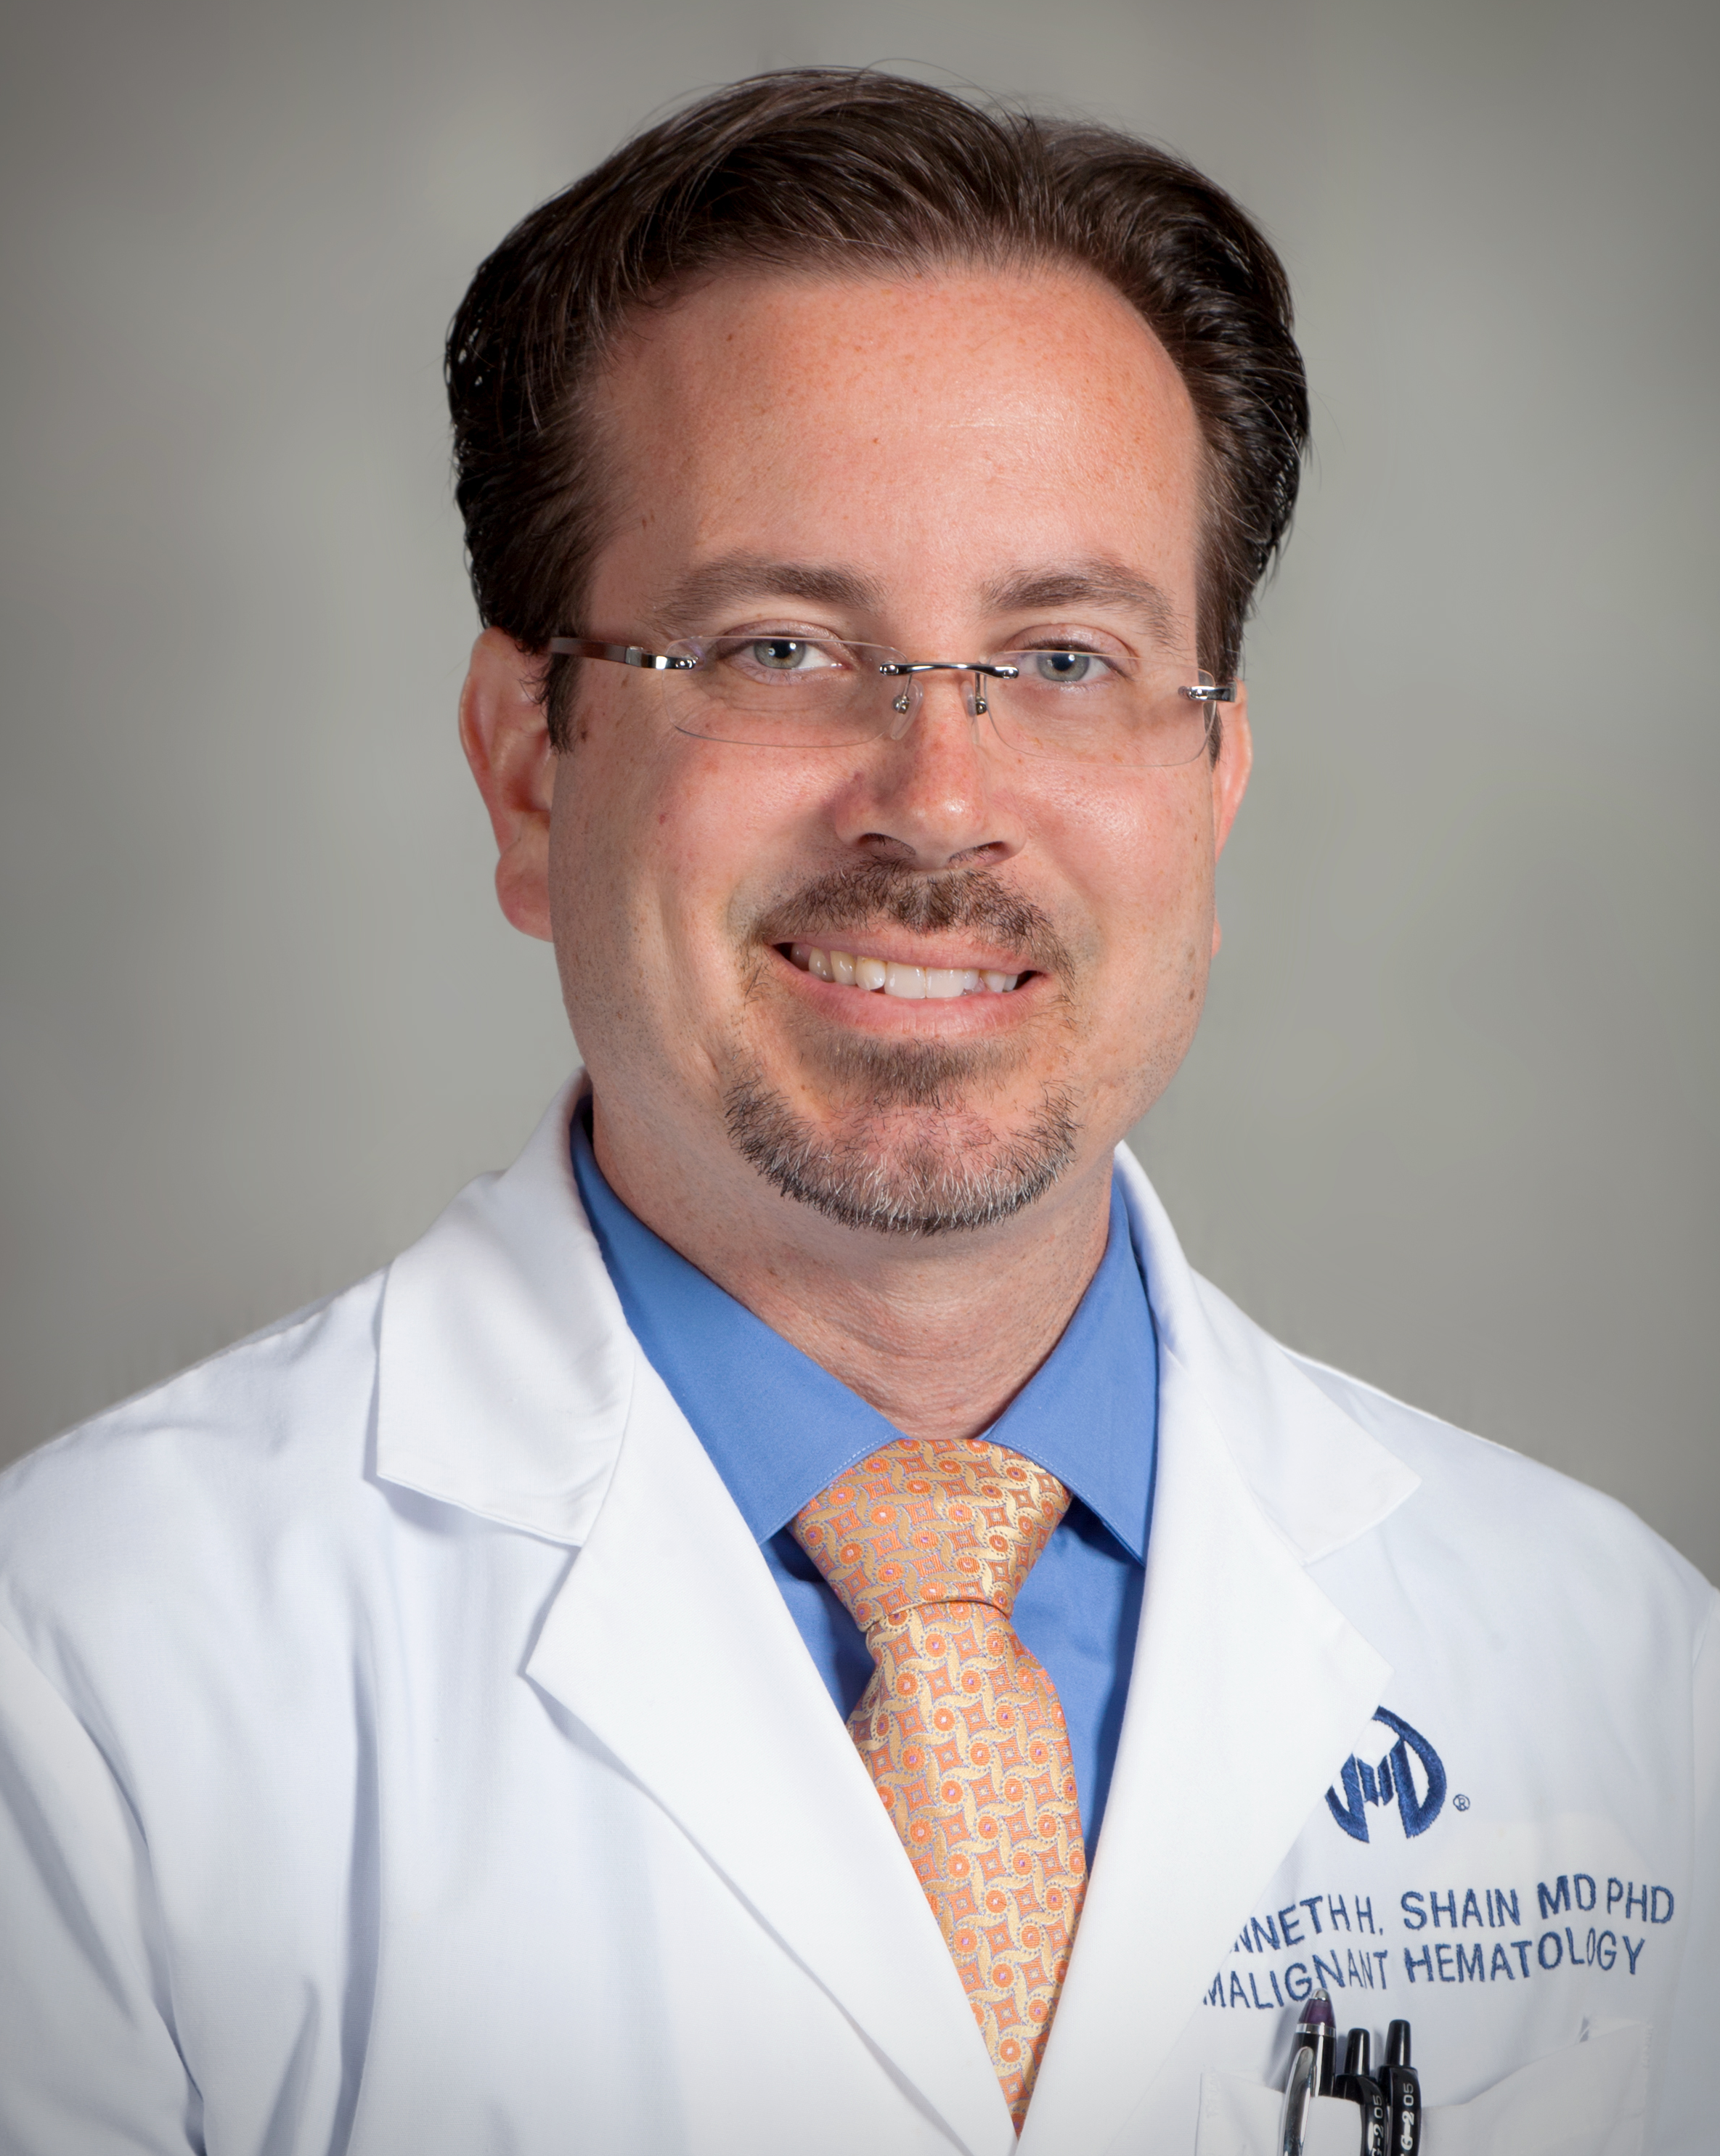 Headshot of Kenneth Shain, MD, PhD | Image credit: H. Lee Moffitt Cancer Center